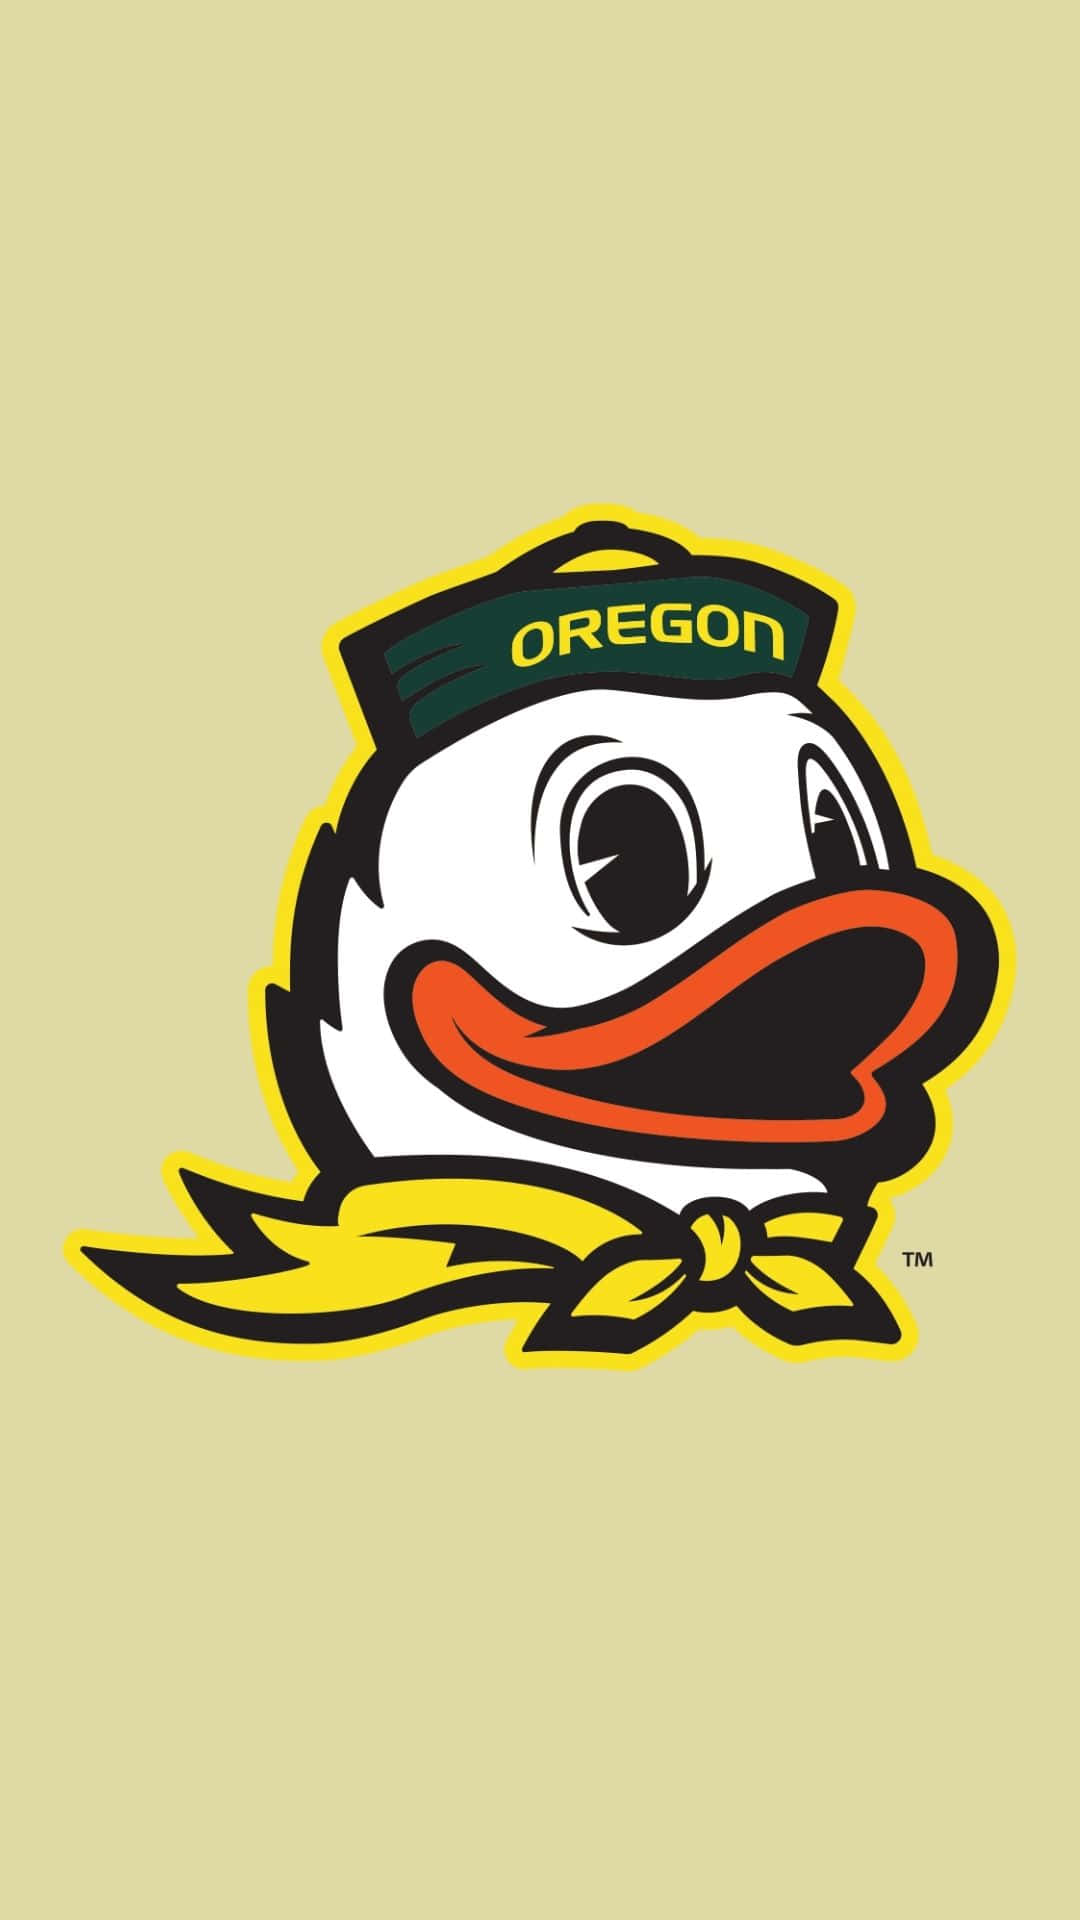 Oregon Ducks Football Team In Action Background